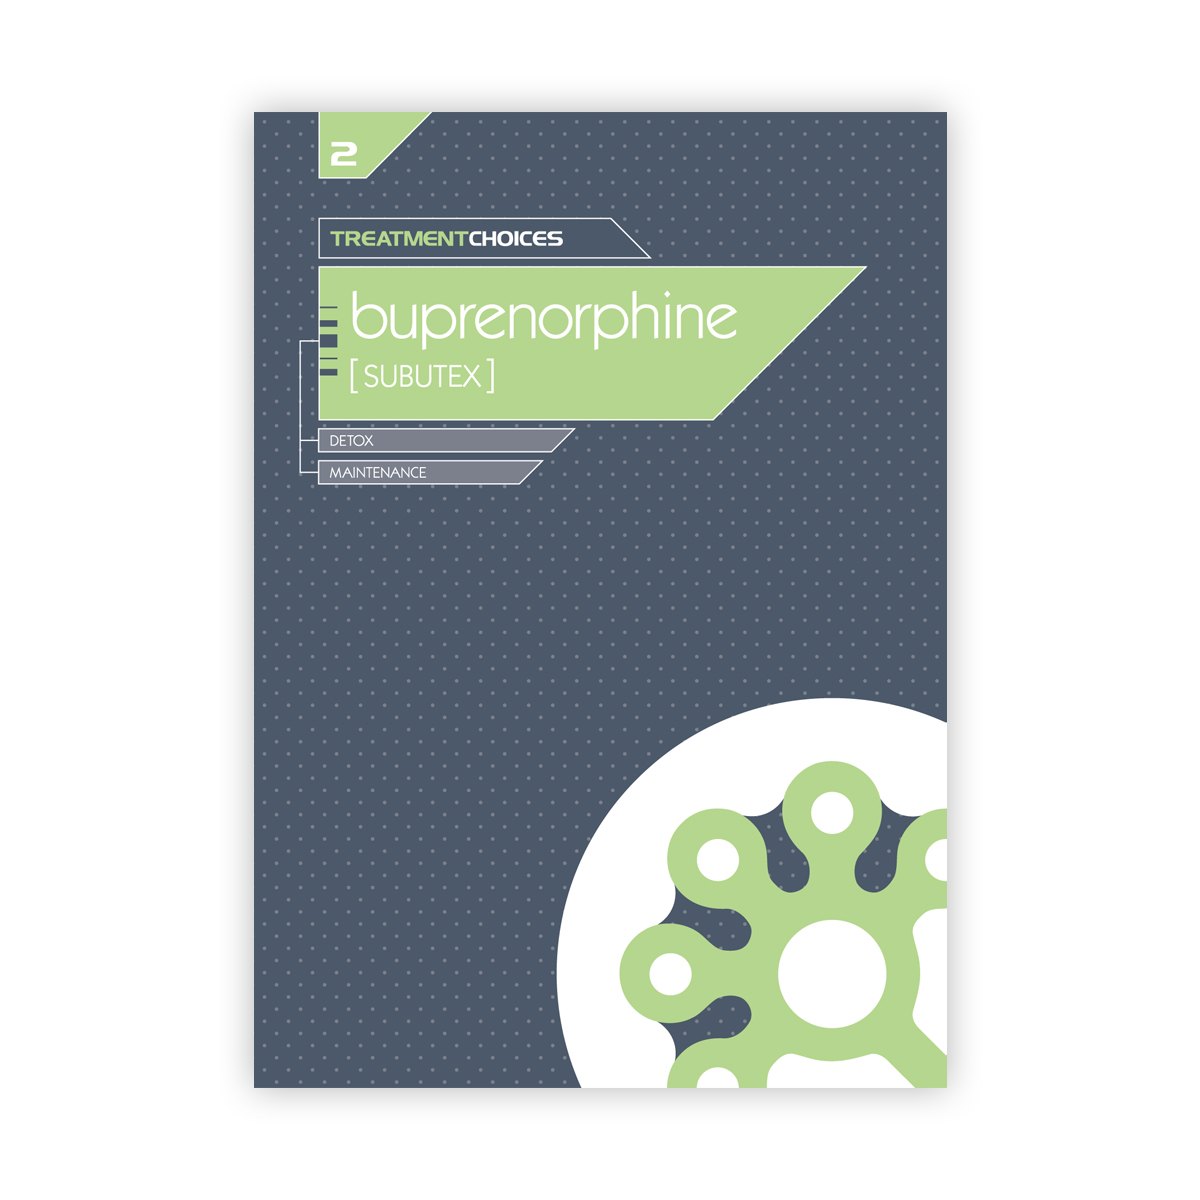 Treatment Choices 2: Buprenorphine